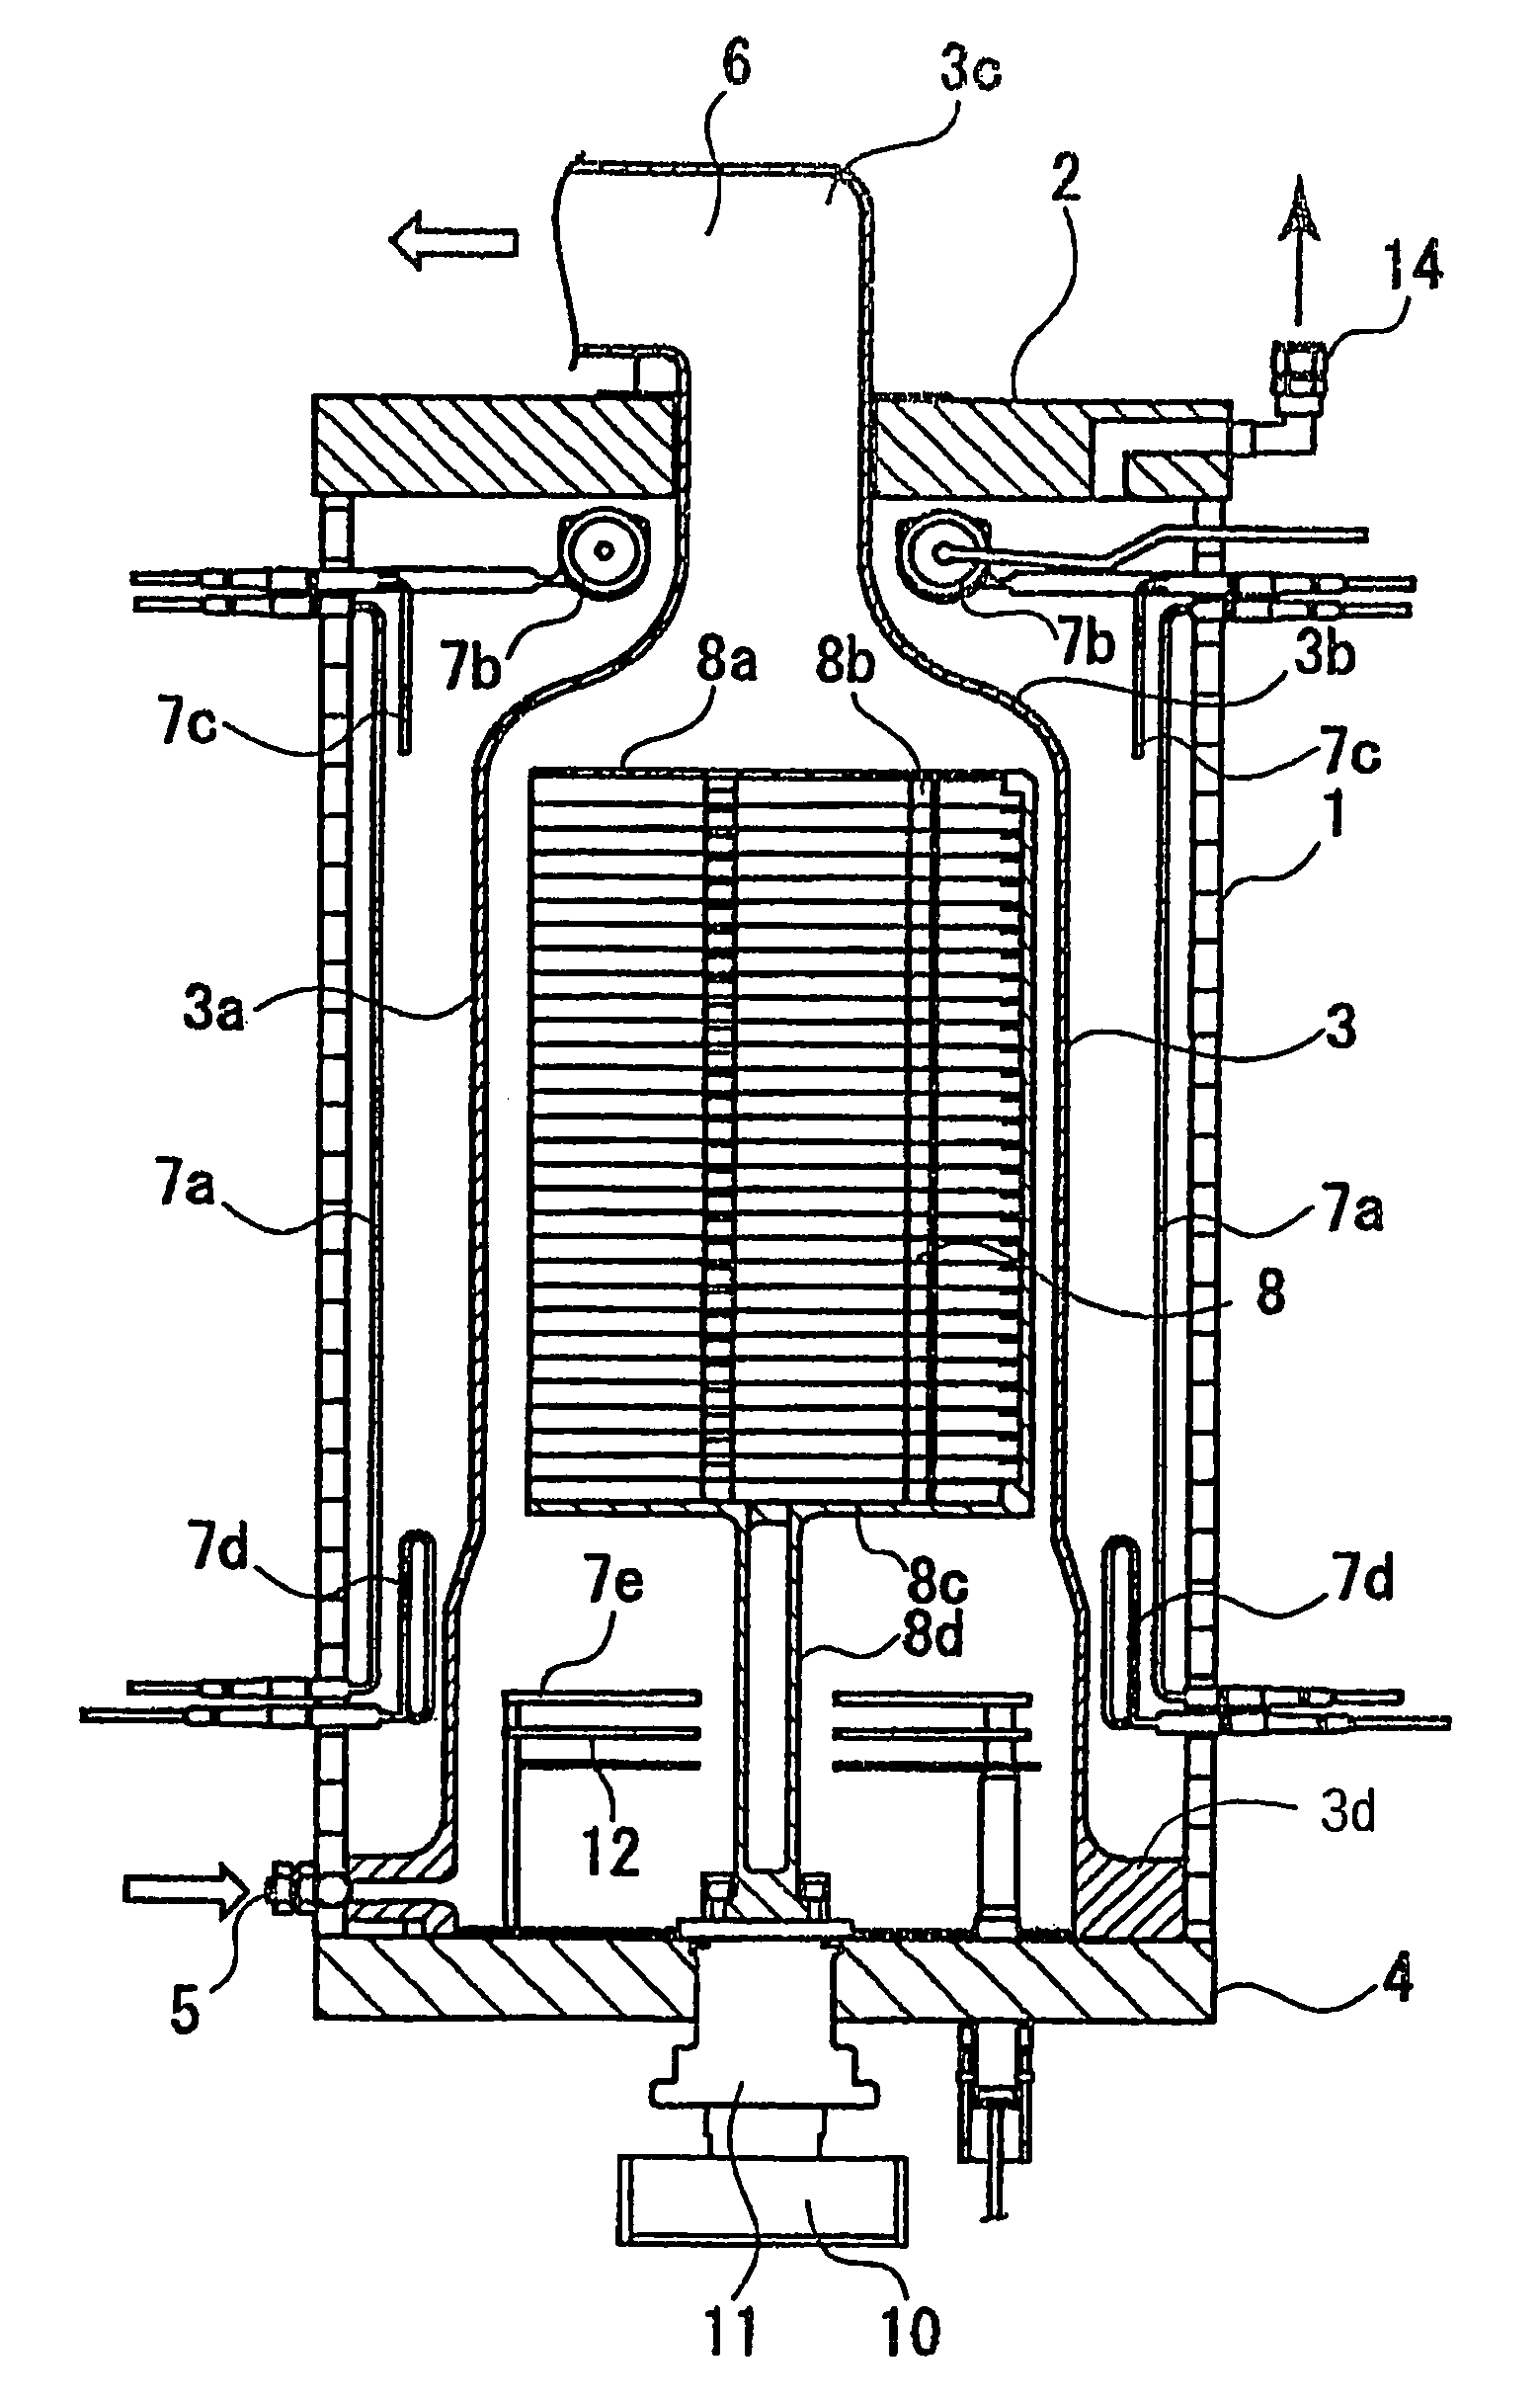 Heat treatment apparatus